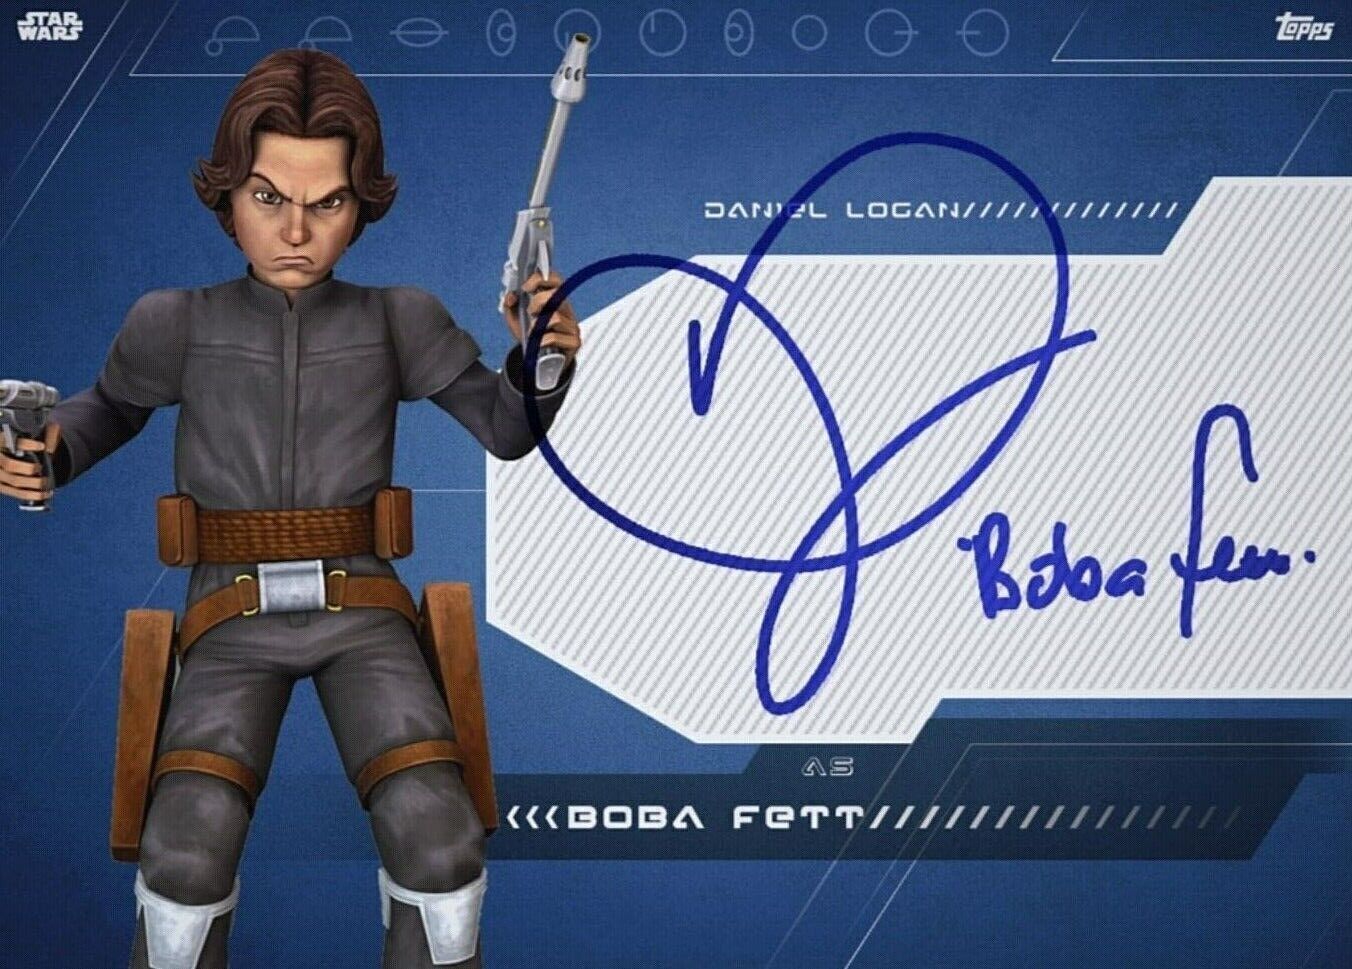 Topps Star Wars Clone Wars Autograph DANIEL LOGAN as BOBA FETT SIG Digital Card